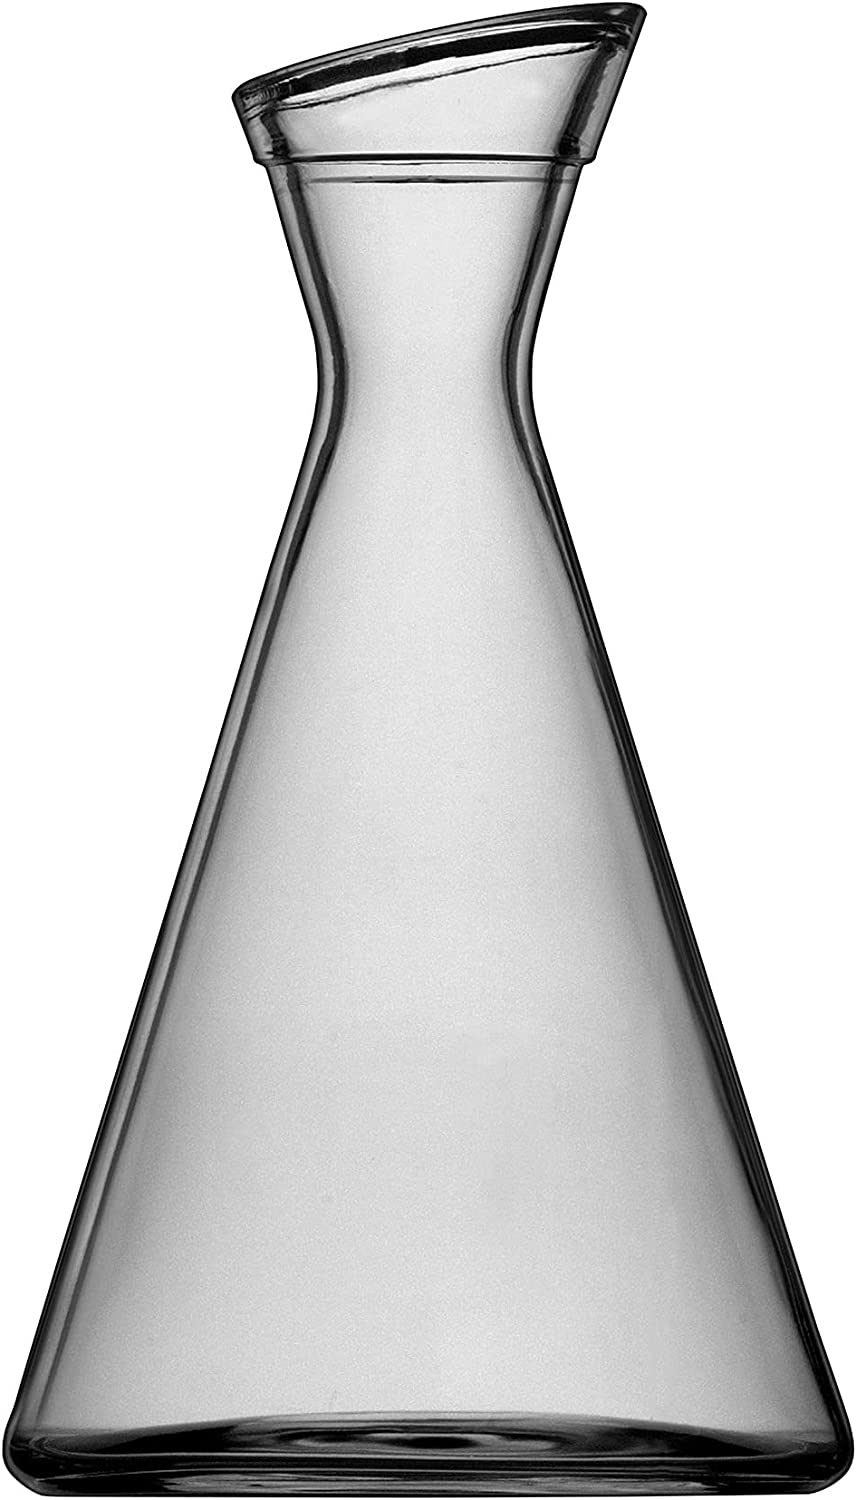 Stölzle Oberglas Pisa Glass Carafe / Set of 6 Carafe 1 L with Slanted Neck / High-Quality Carafe Glass Suitable as Water Carafe, Carafe for Lemonade, Wine Carafe